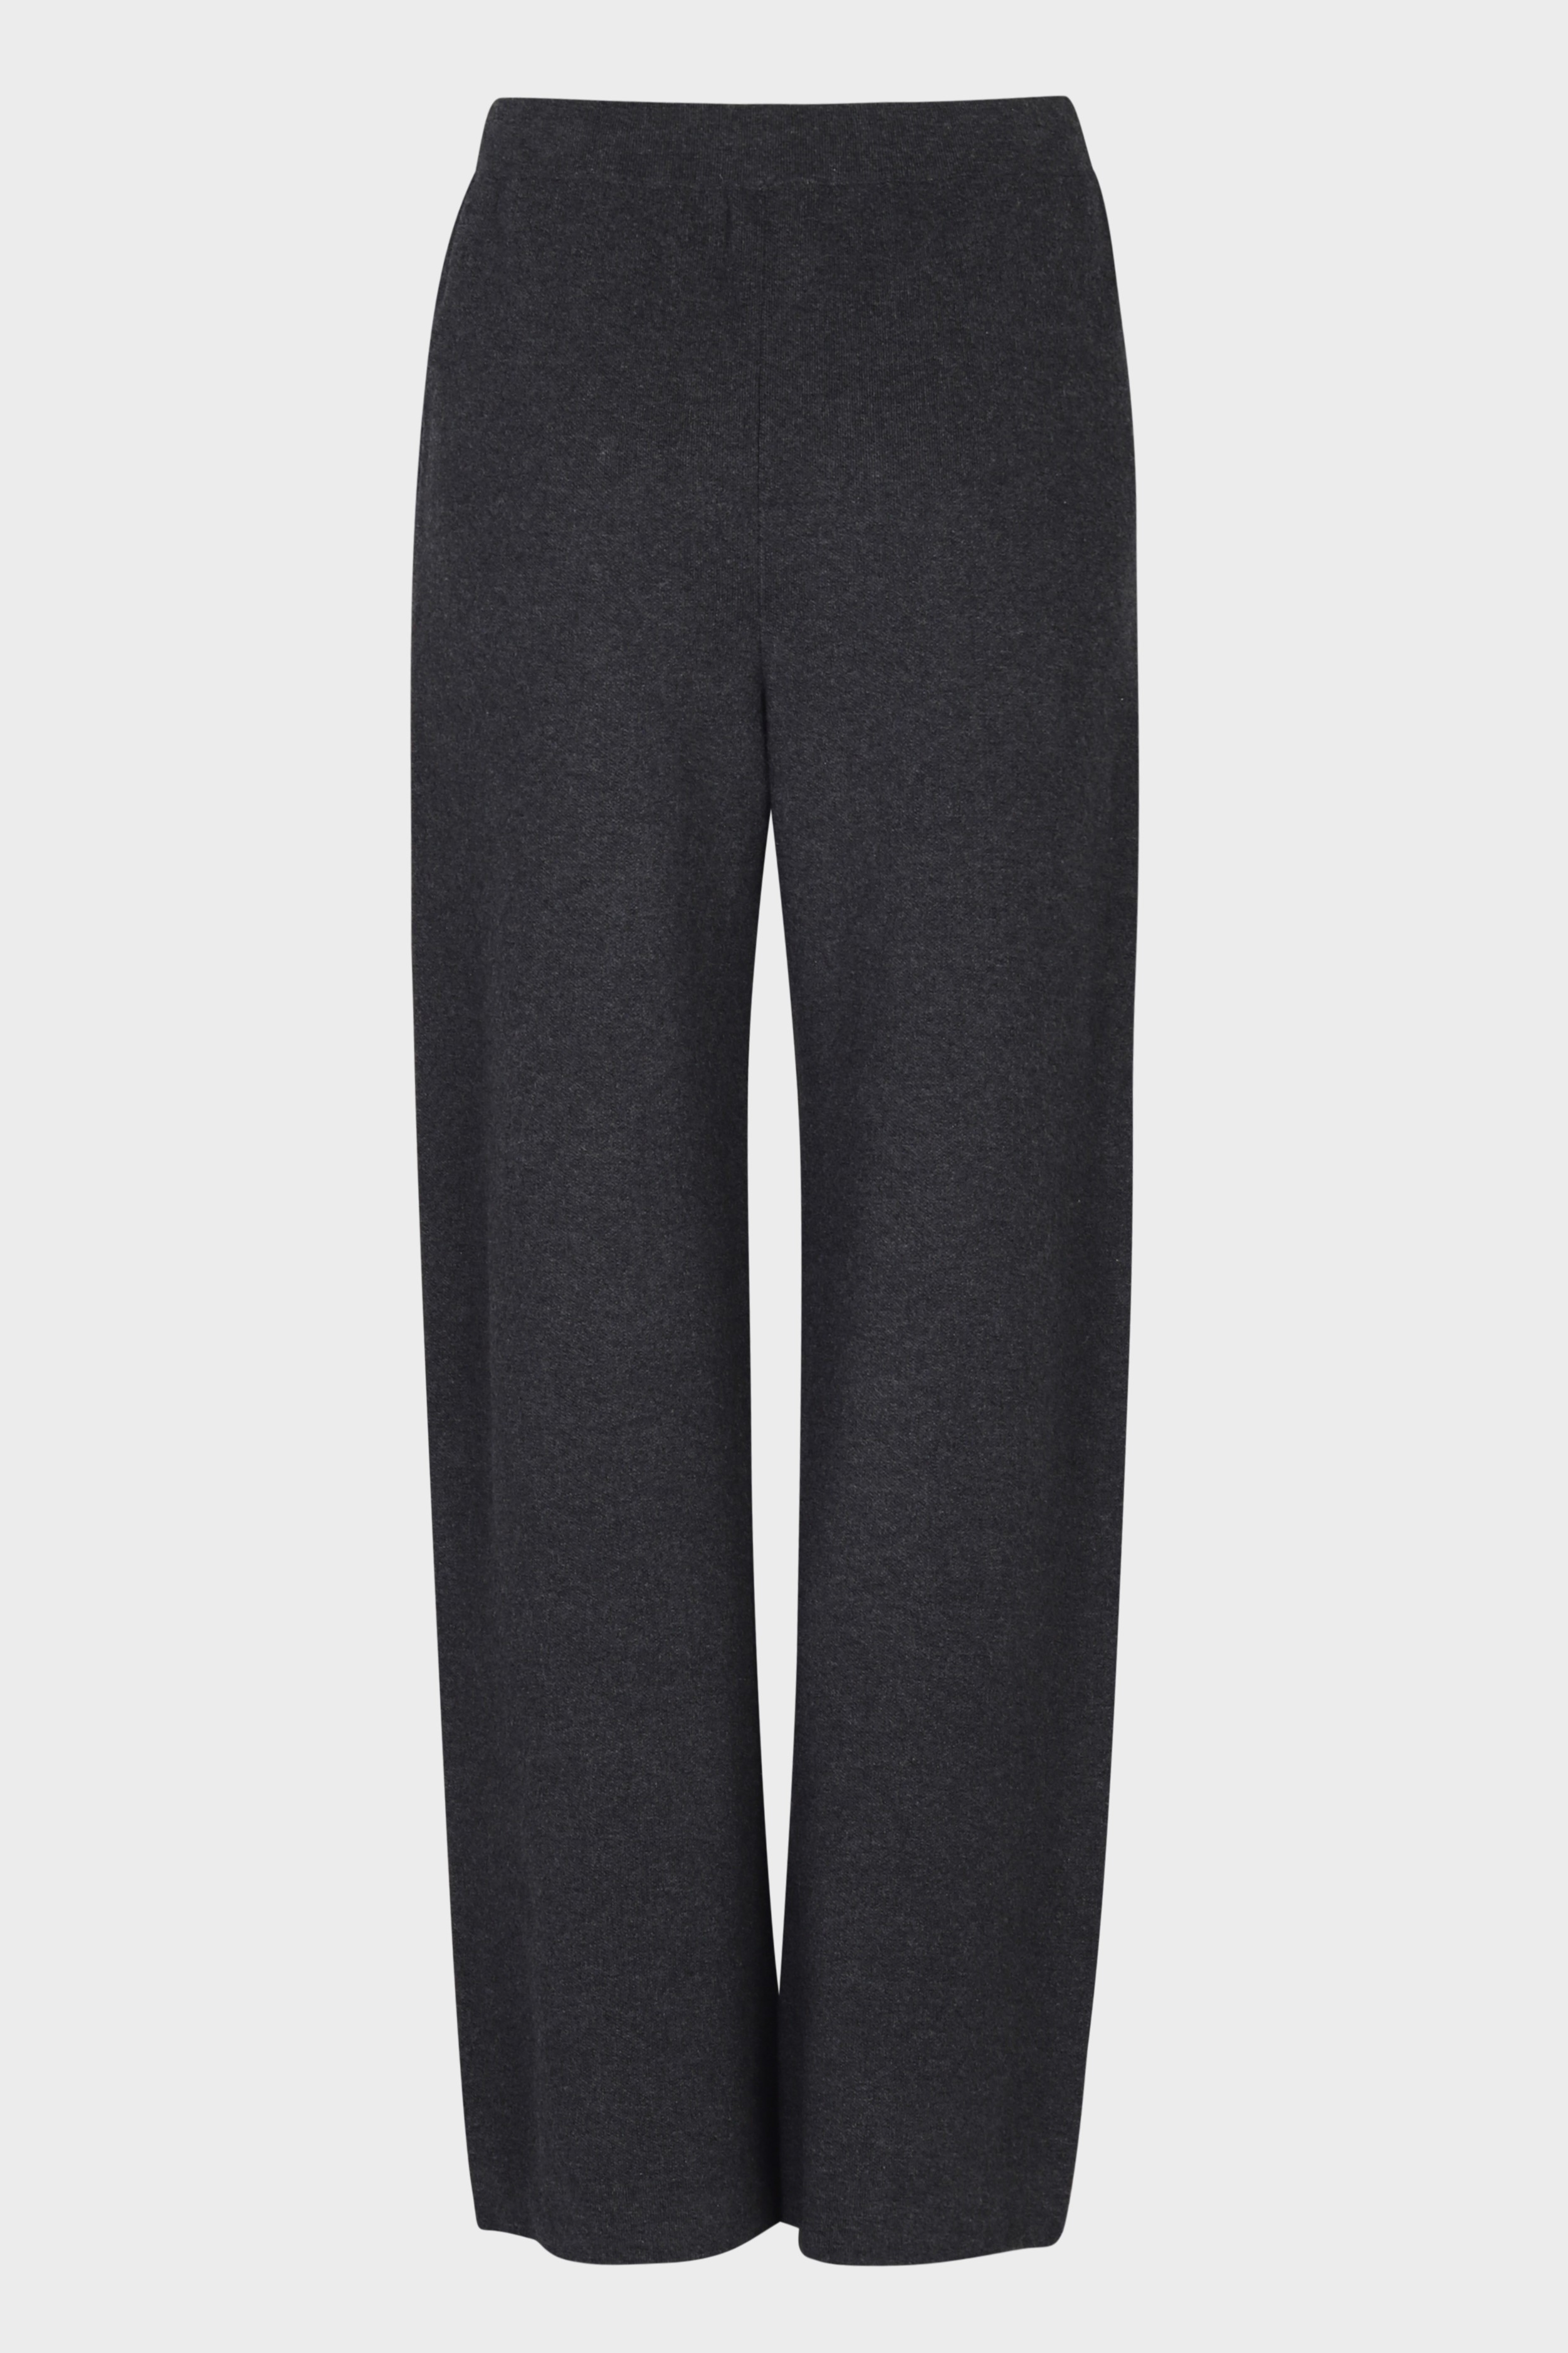 FLONA Cotton/ Cashmere Knit Pant in Dark Grey XS